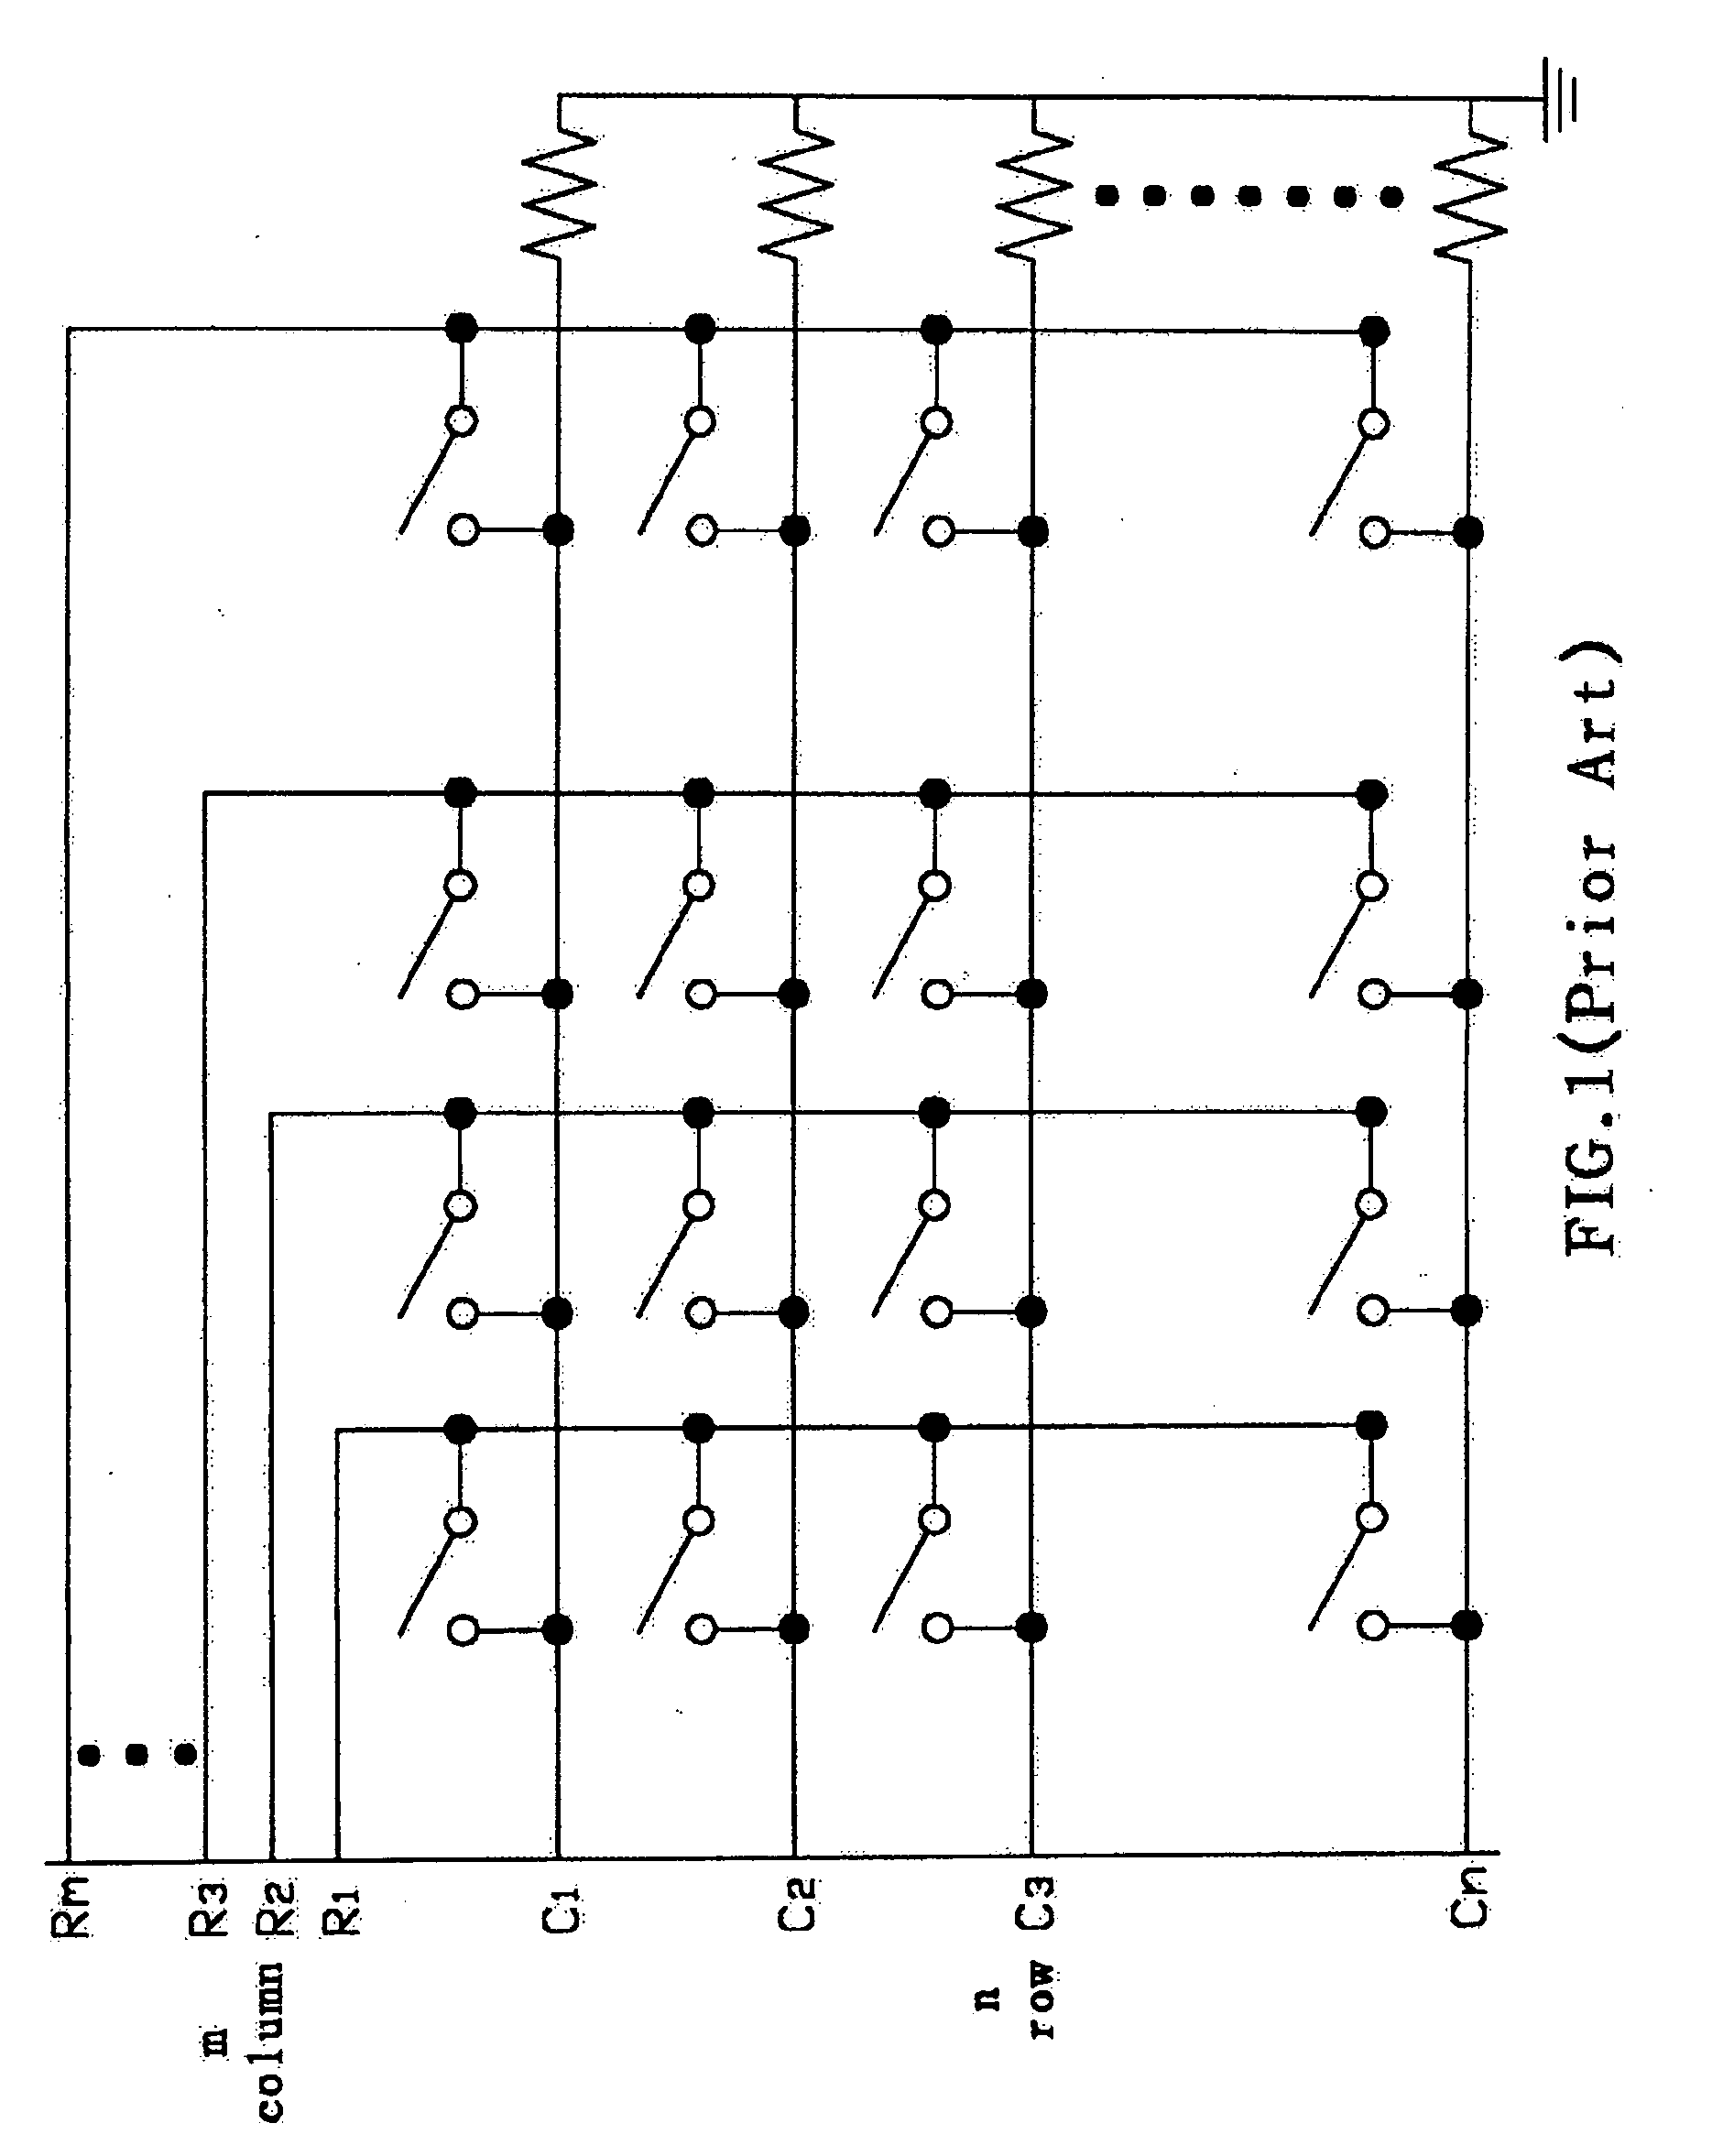 Apparatus and method of interruptible analog input